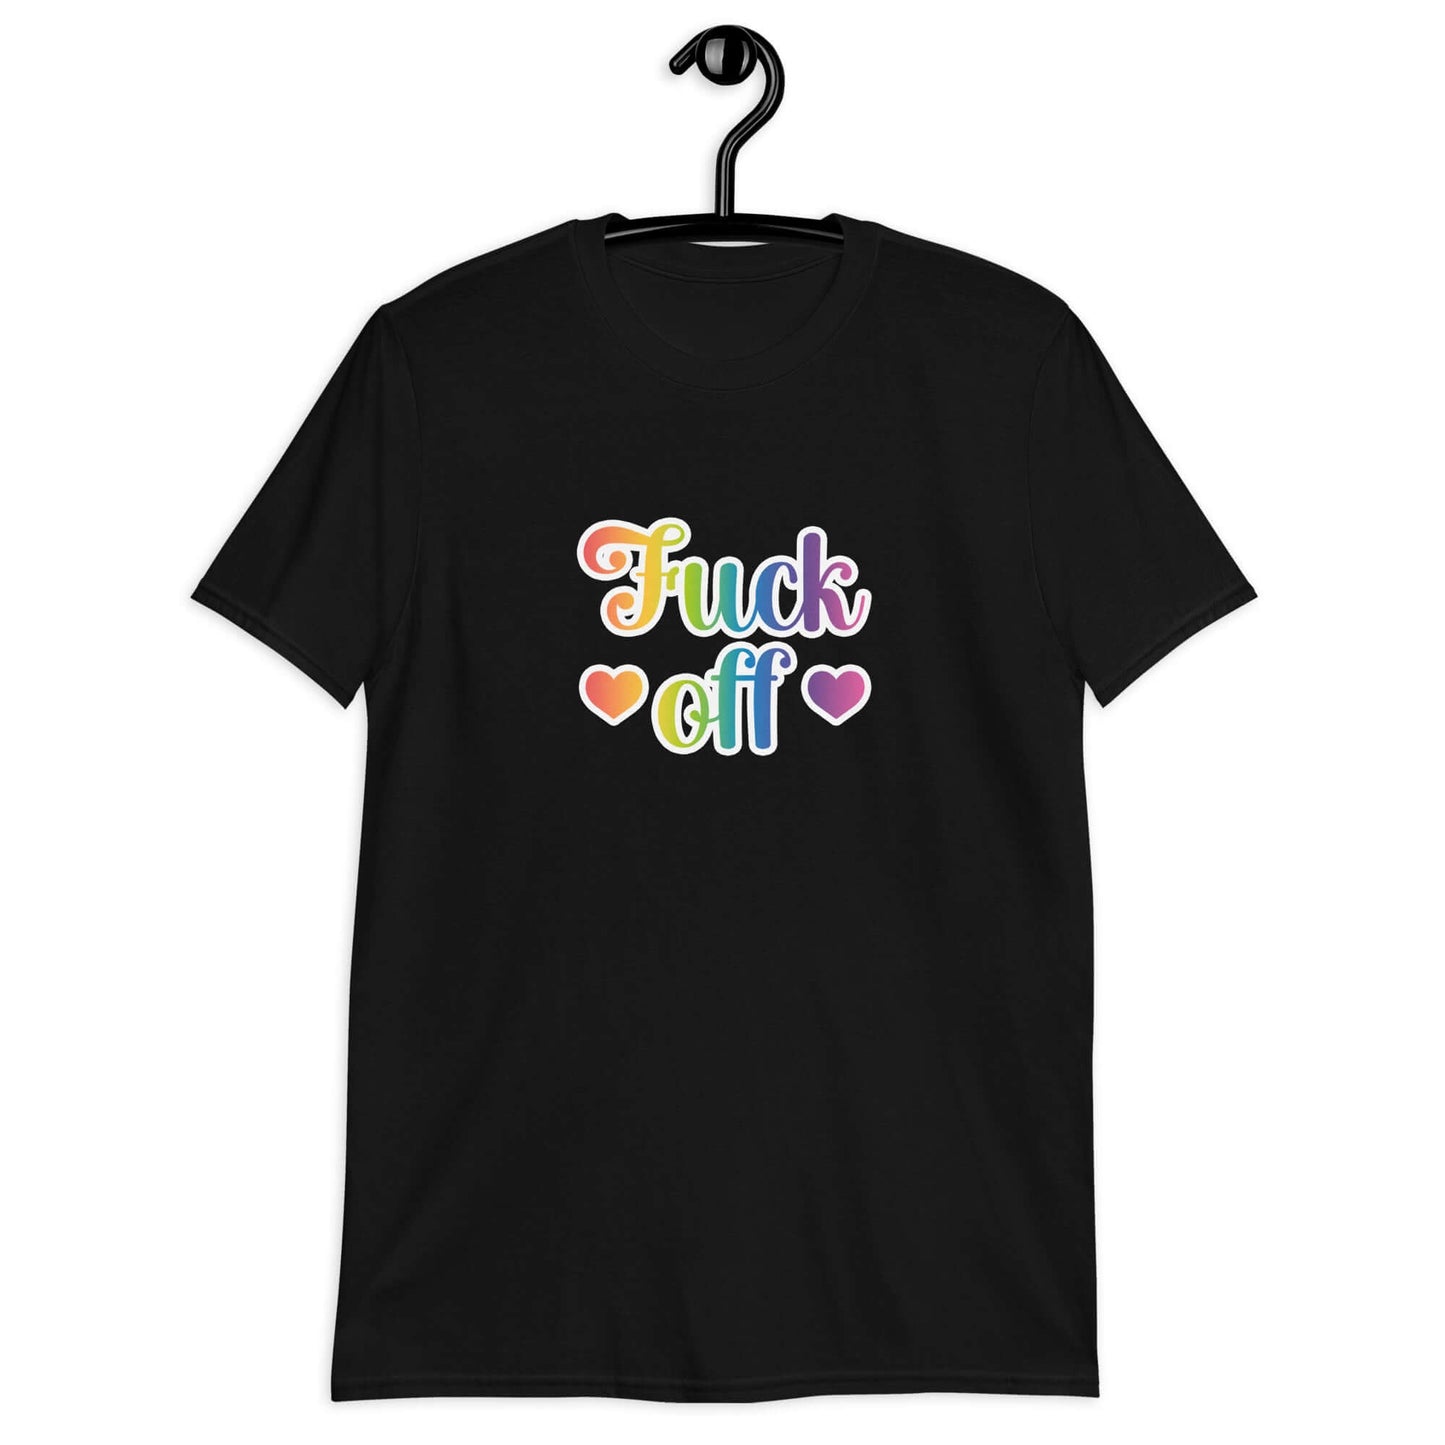 F off t-shirt. 80's rainbow font style graphics